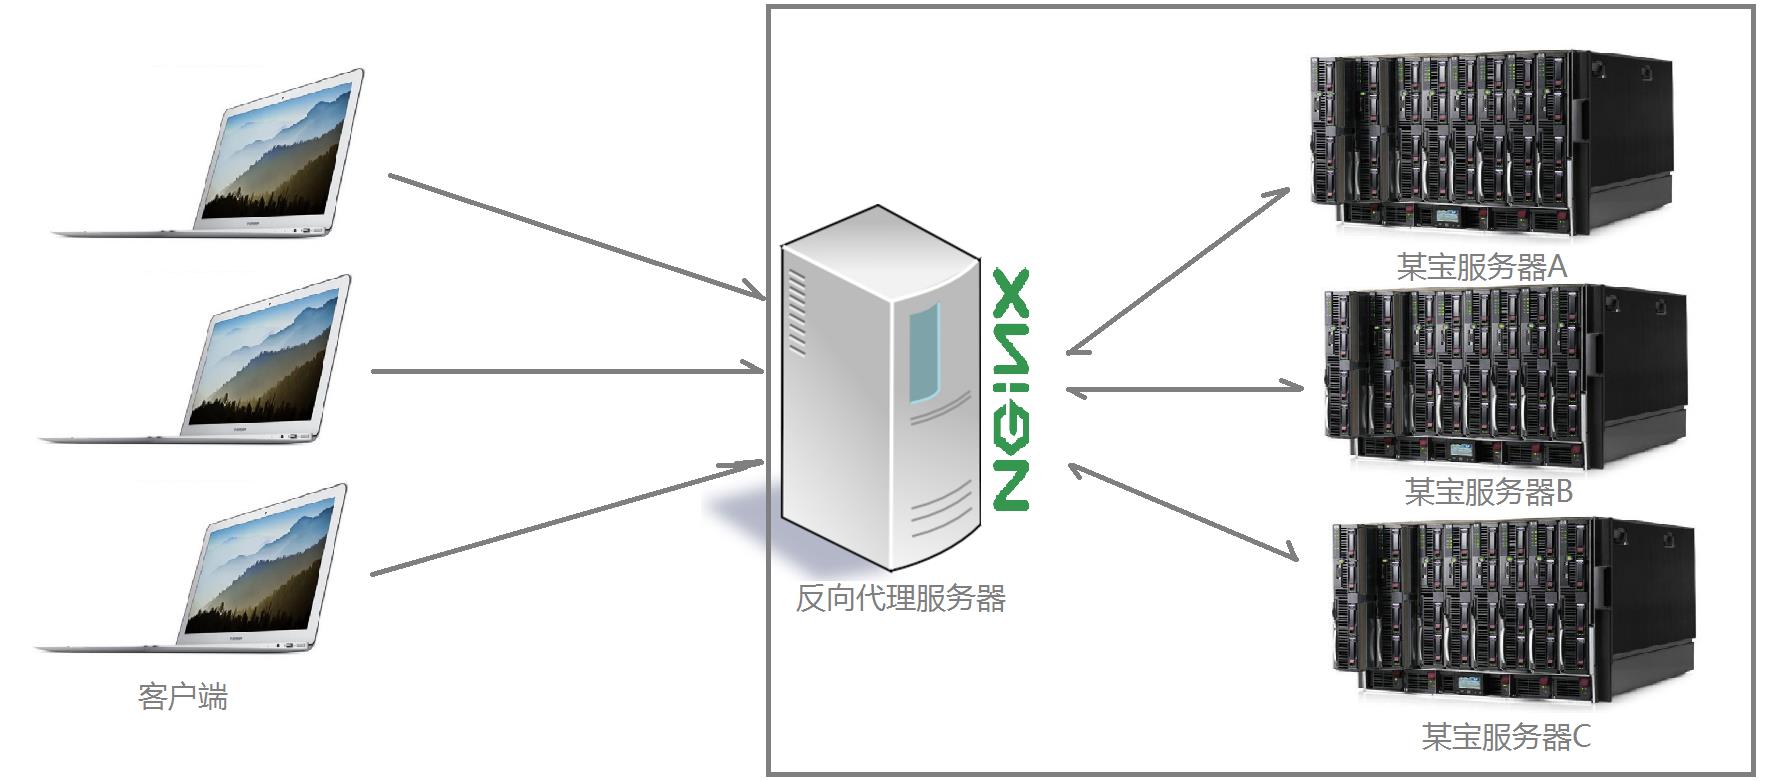 Nginx安装和部署 - 文章图片